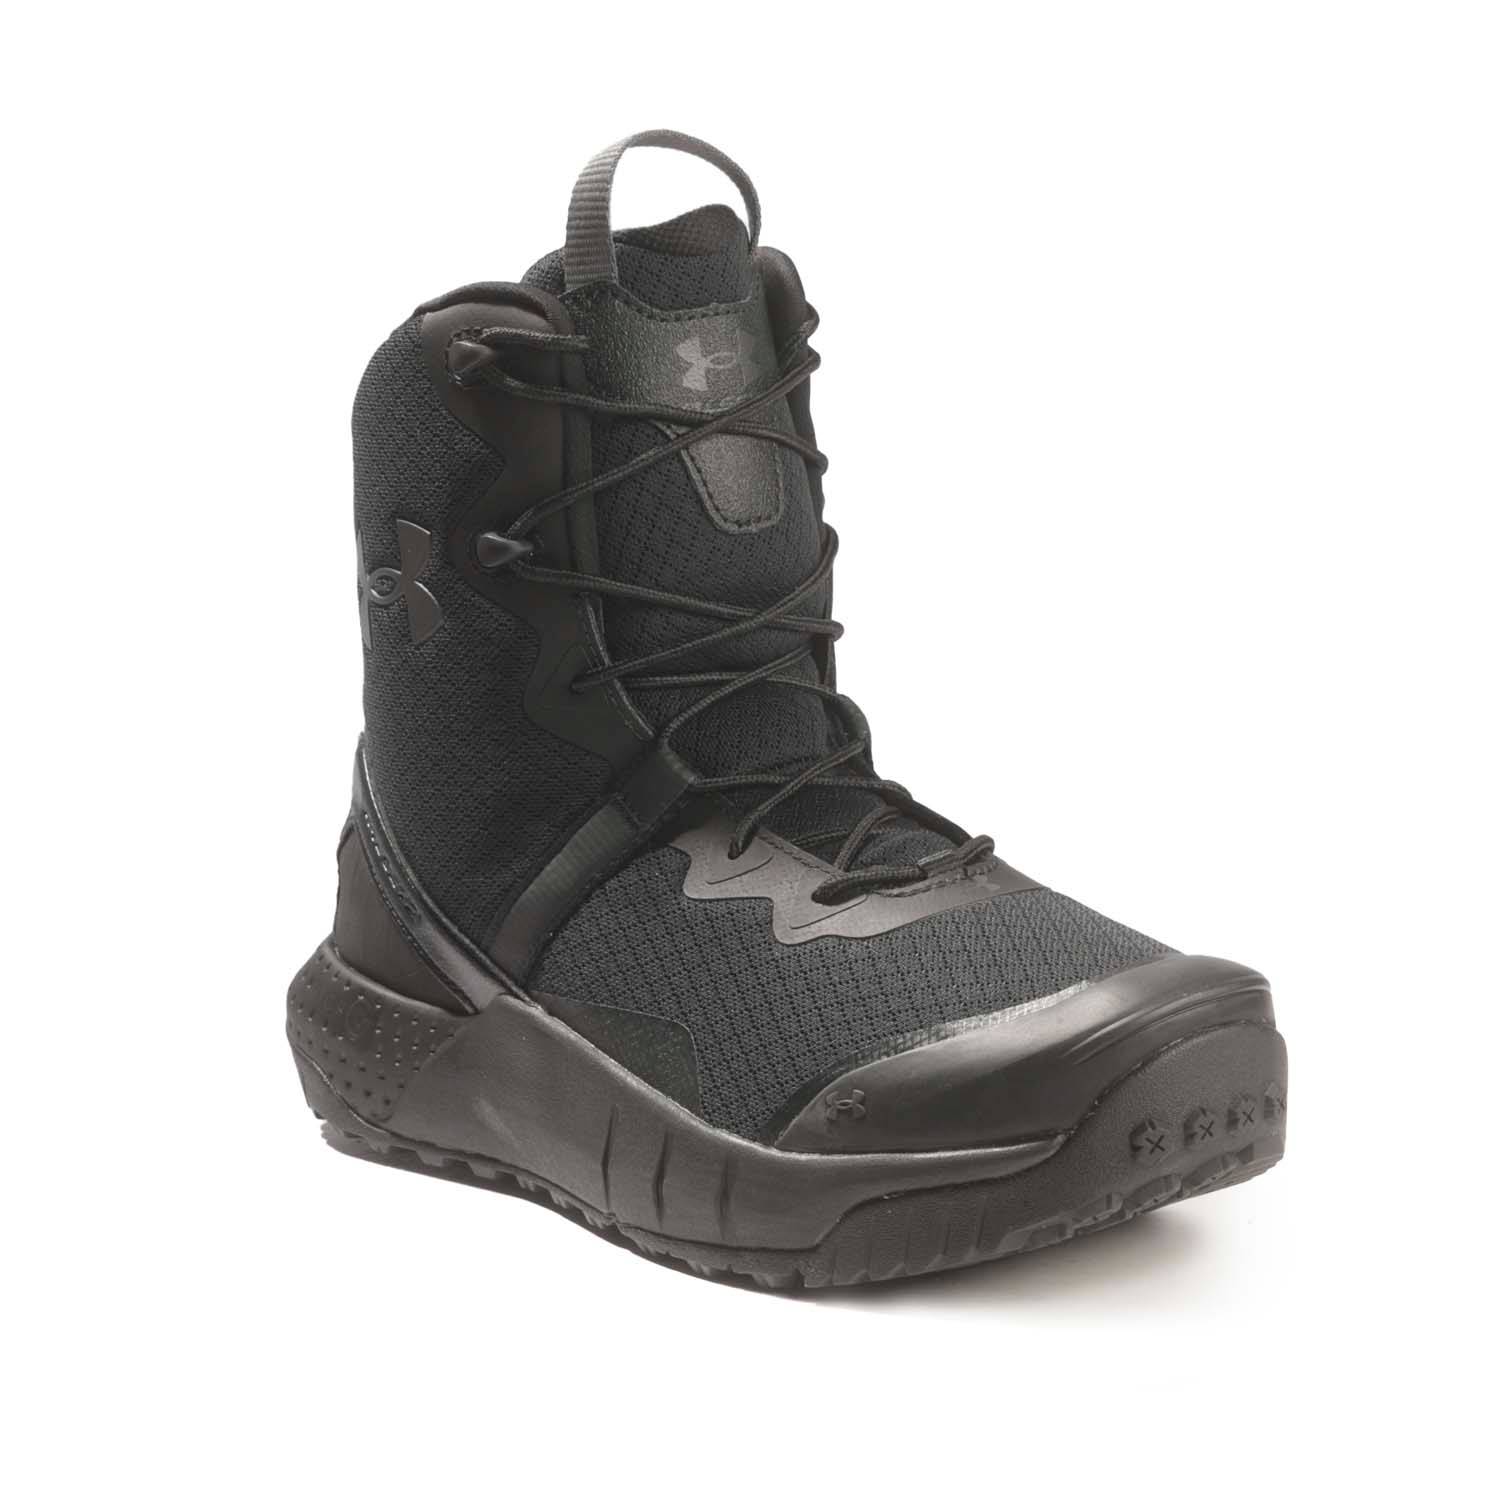 Under Armour Micro G Valsetz Men's Tactical Boots, Black/Pitch Gray